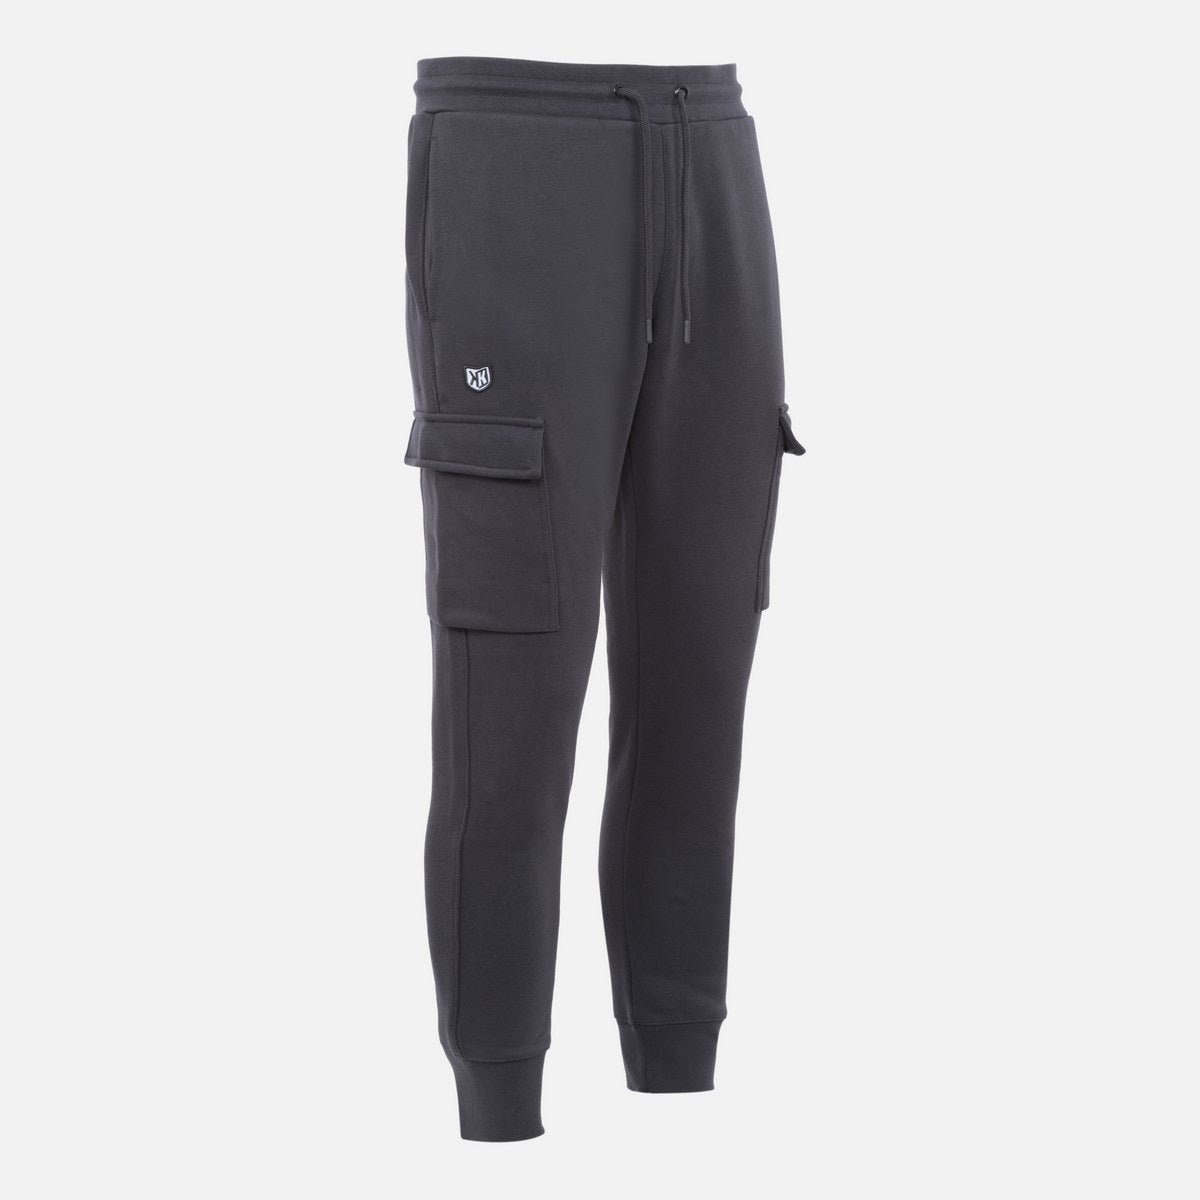 FK Cargo Pants - Charcoal Gray